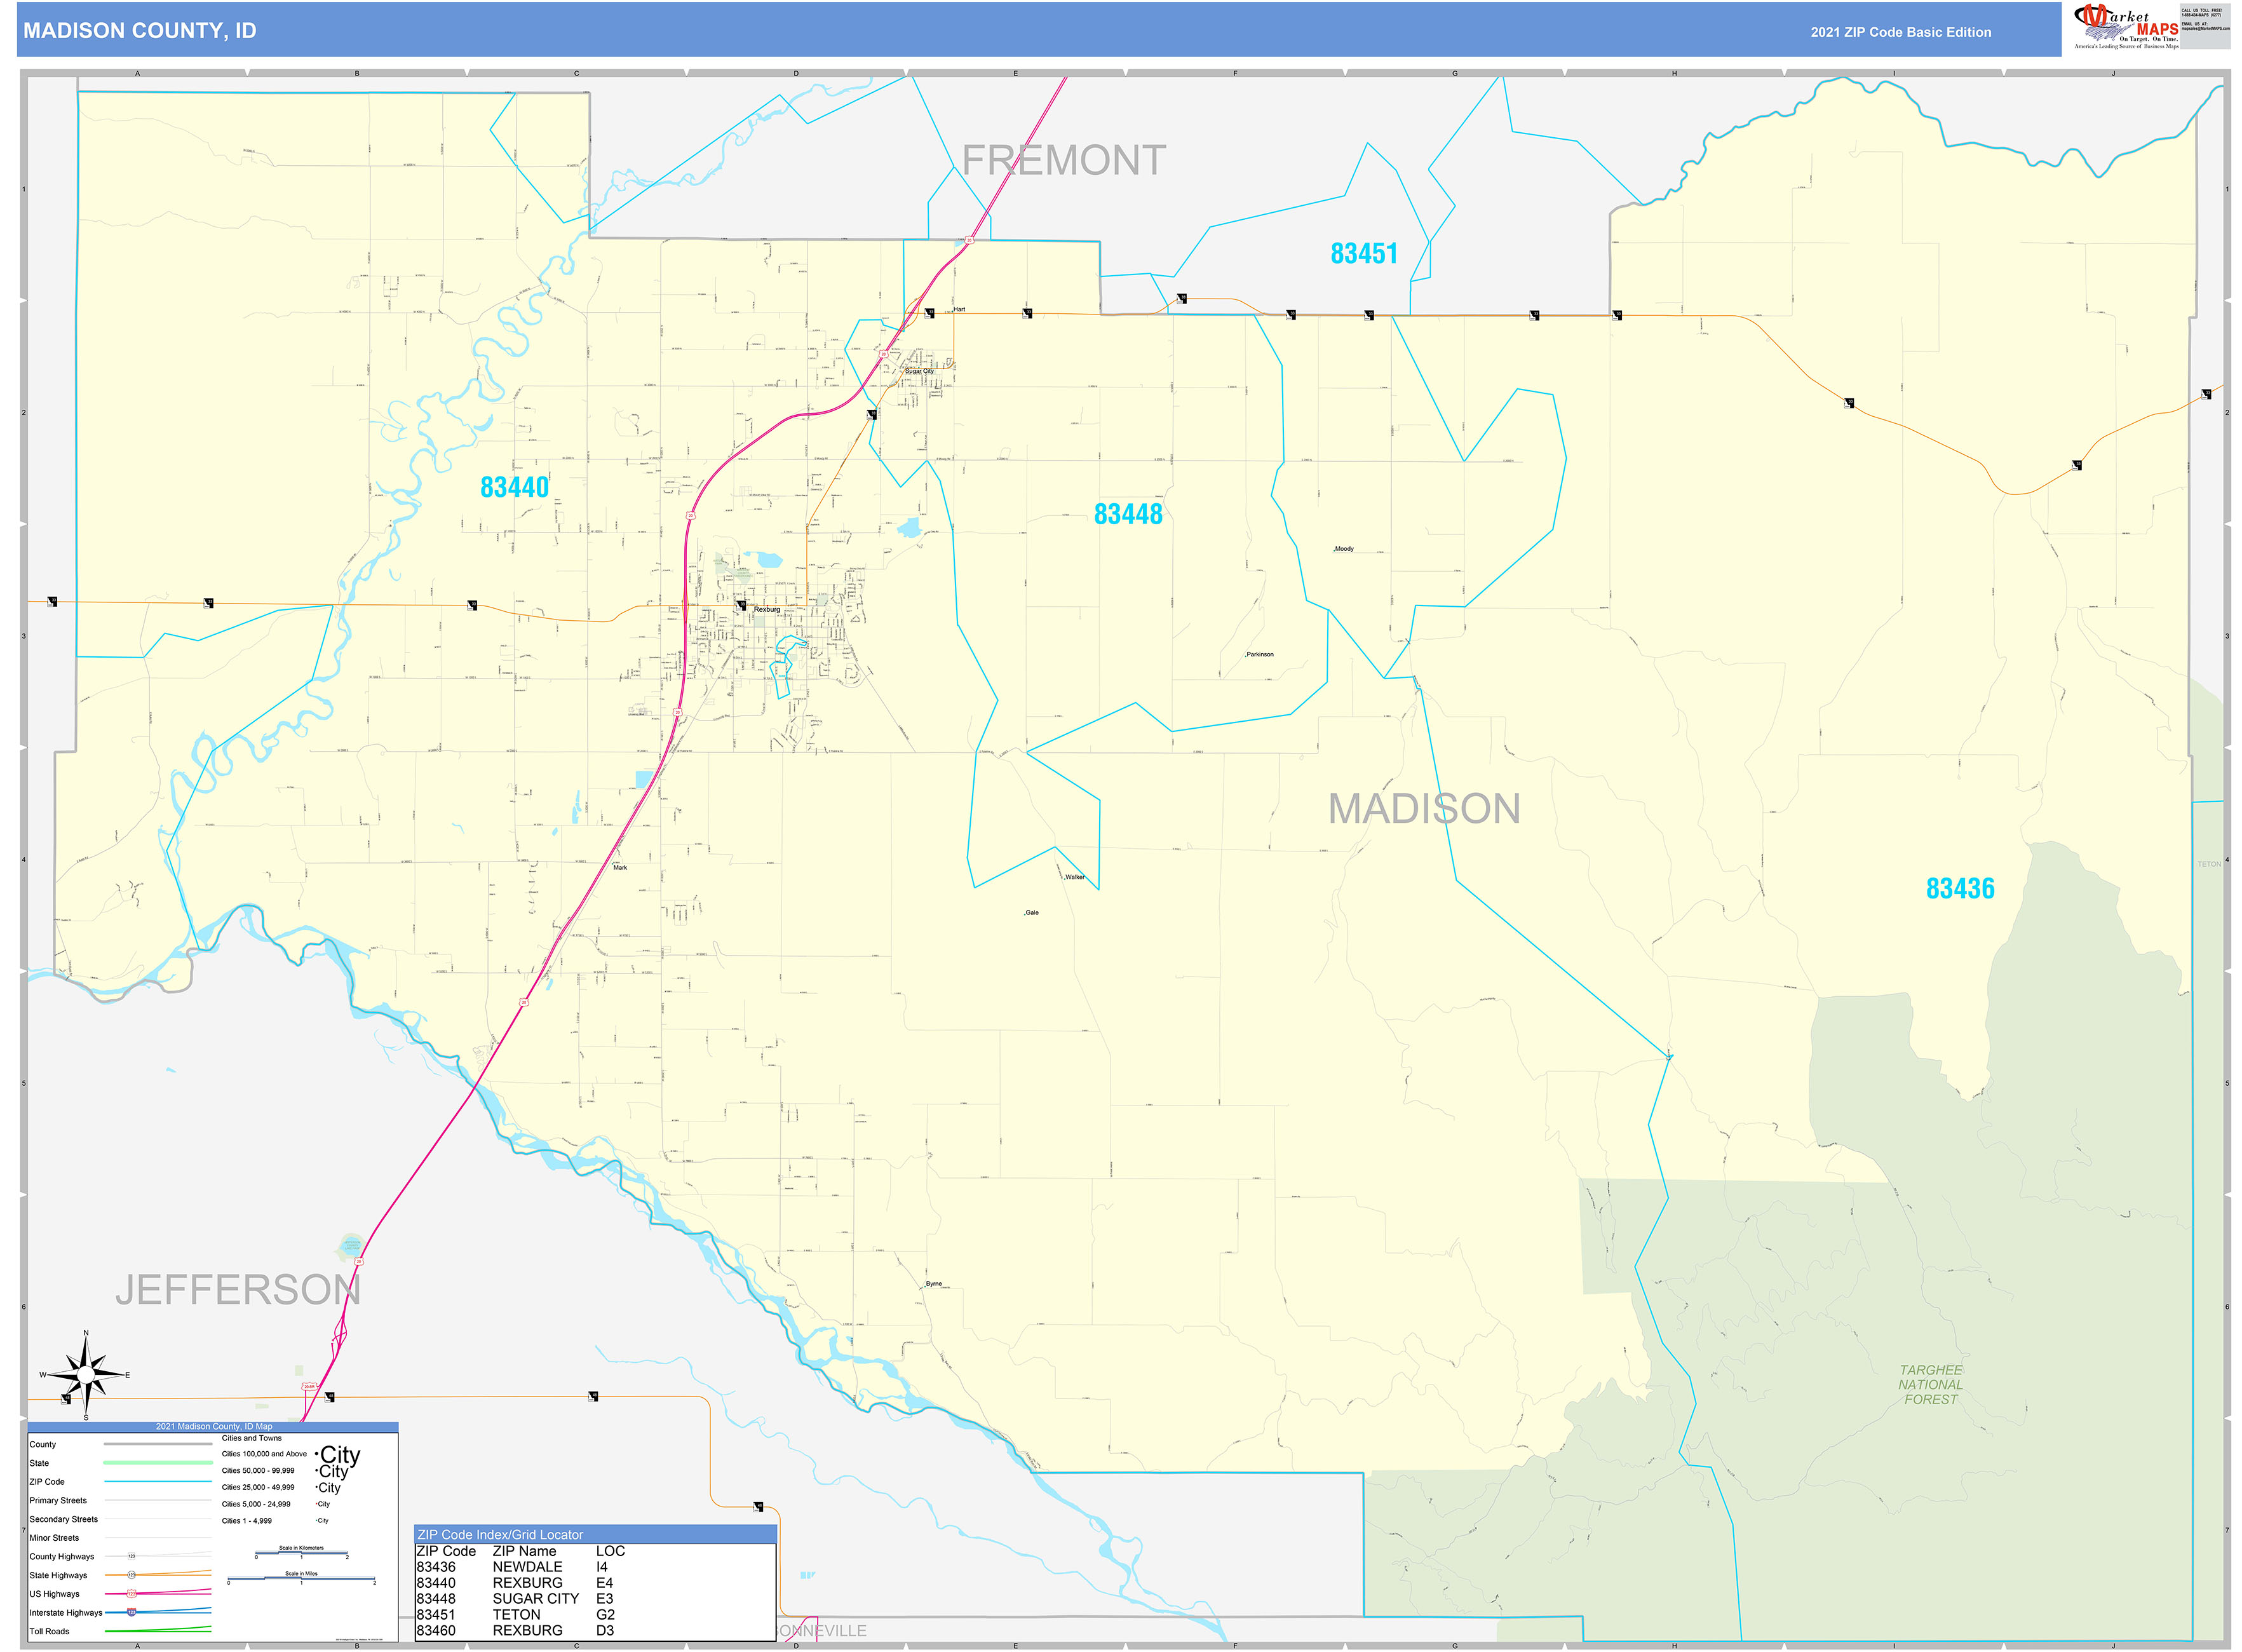 Madison County, ID Zip Code Wall Map Basic Style by MarketMAPS